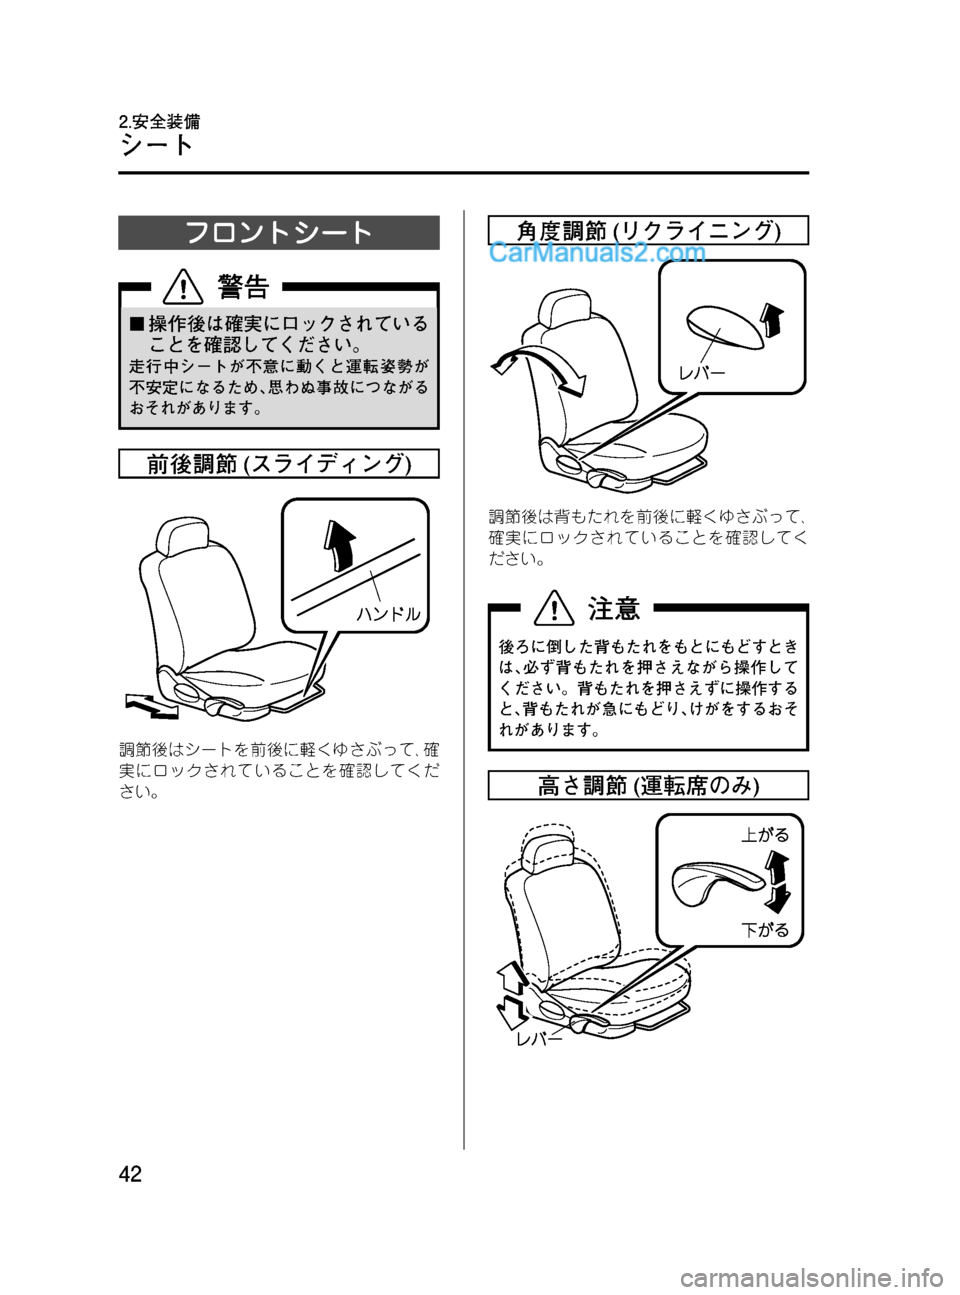 MAZDA MODEL VERISA 2007  ベリーサ｜取扱説明書 (in Japanese) Black plate (42,1)
フロントシート
¢操作後は確実にロックされている
ことを確認してください。
走行中シートが不意に動くと運転姿勢が
不安定になる�